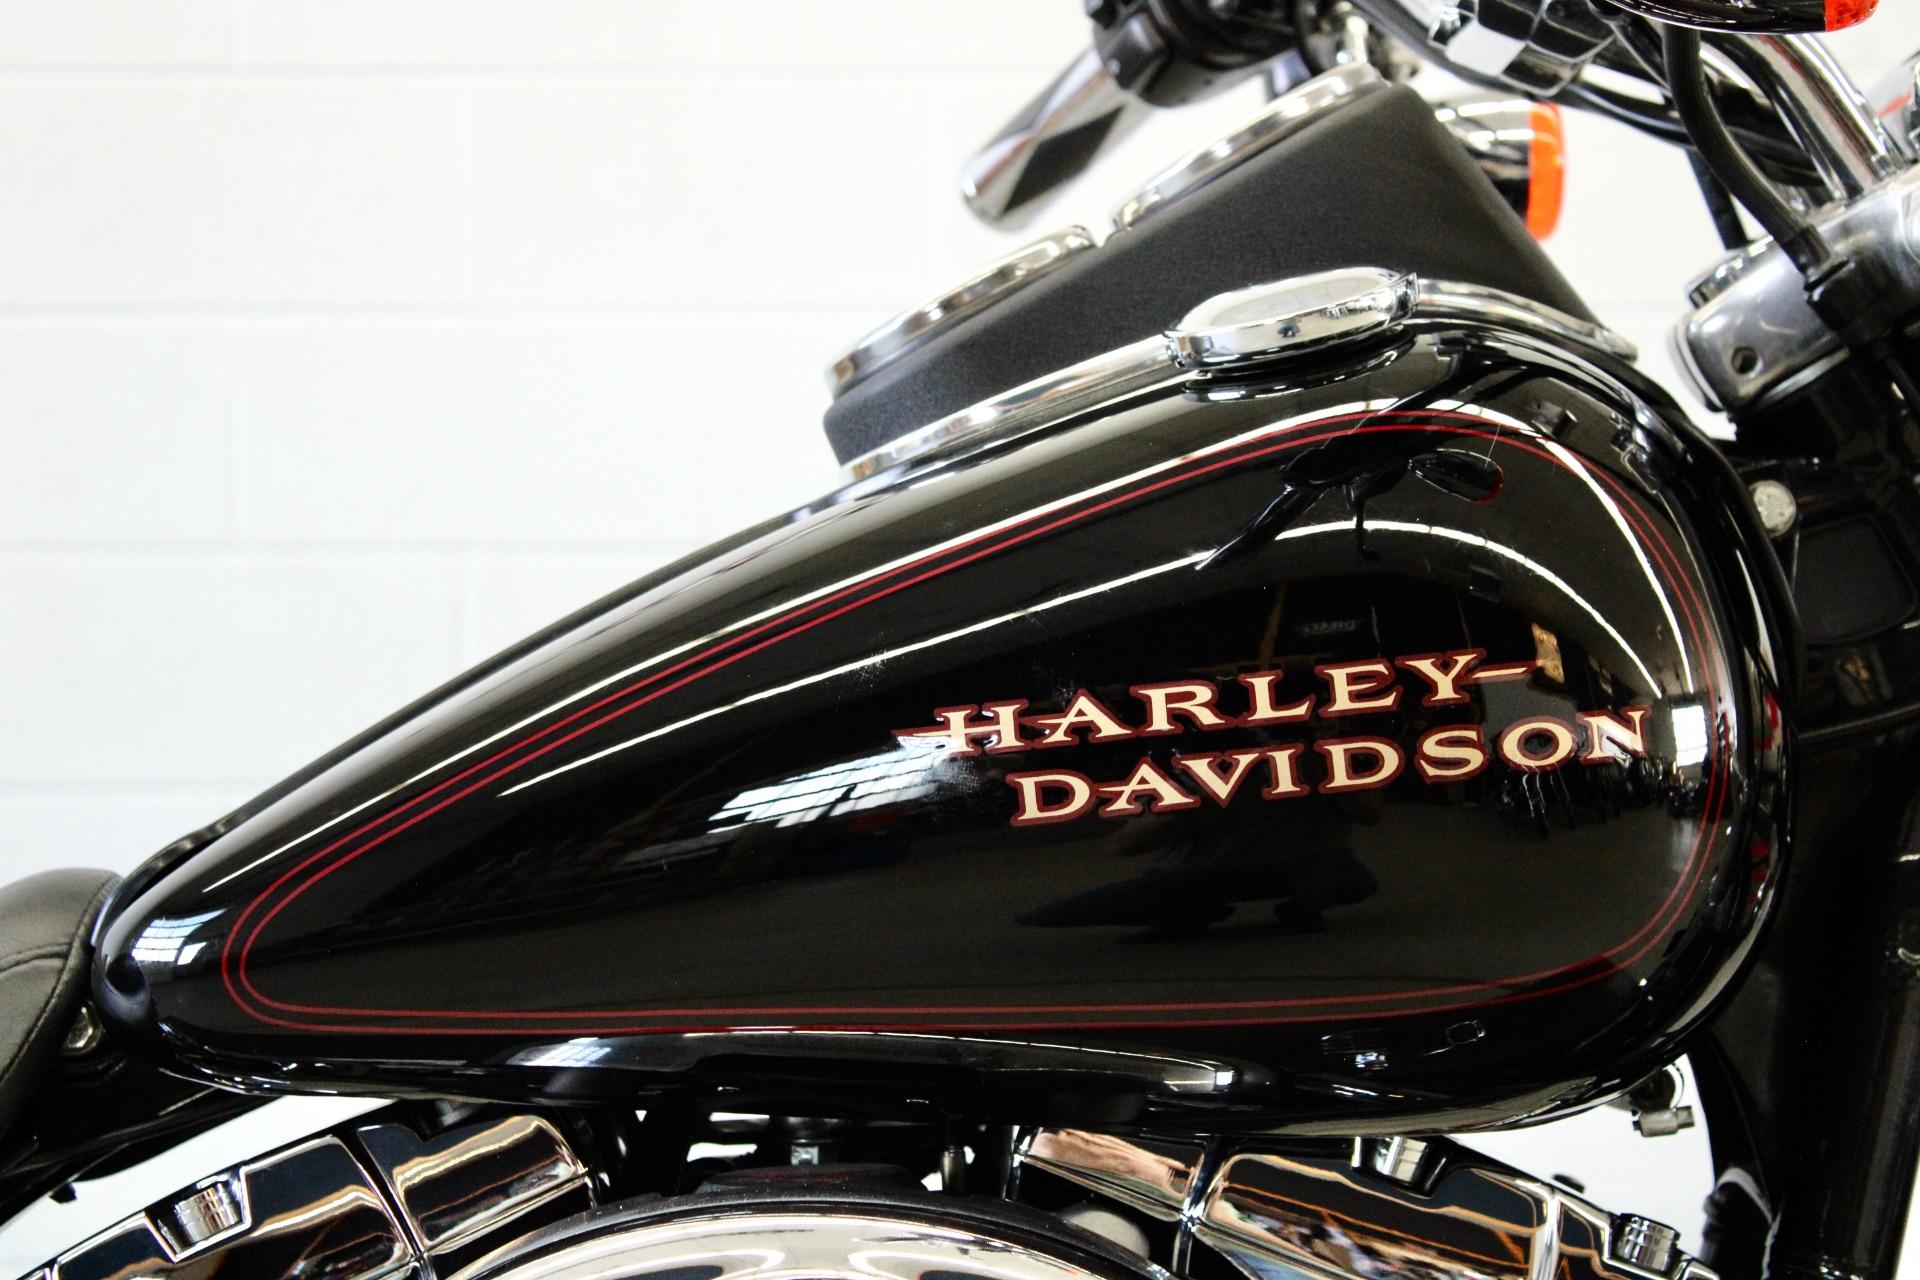 2002 Harley-Davidson FXDL  Dyna Low Rider® in Fredericksburg, Virginia - Photo 13